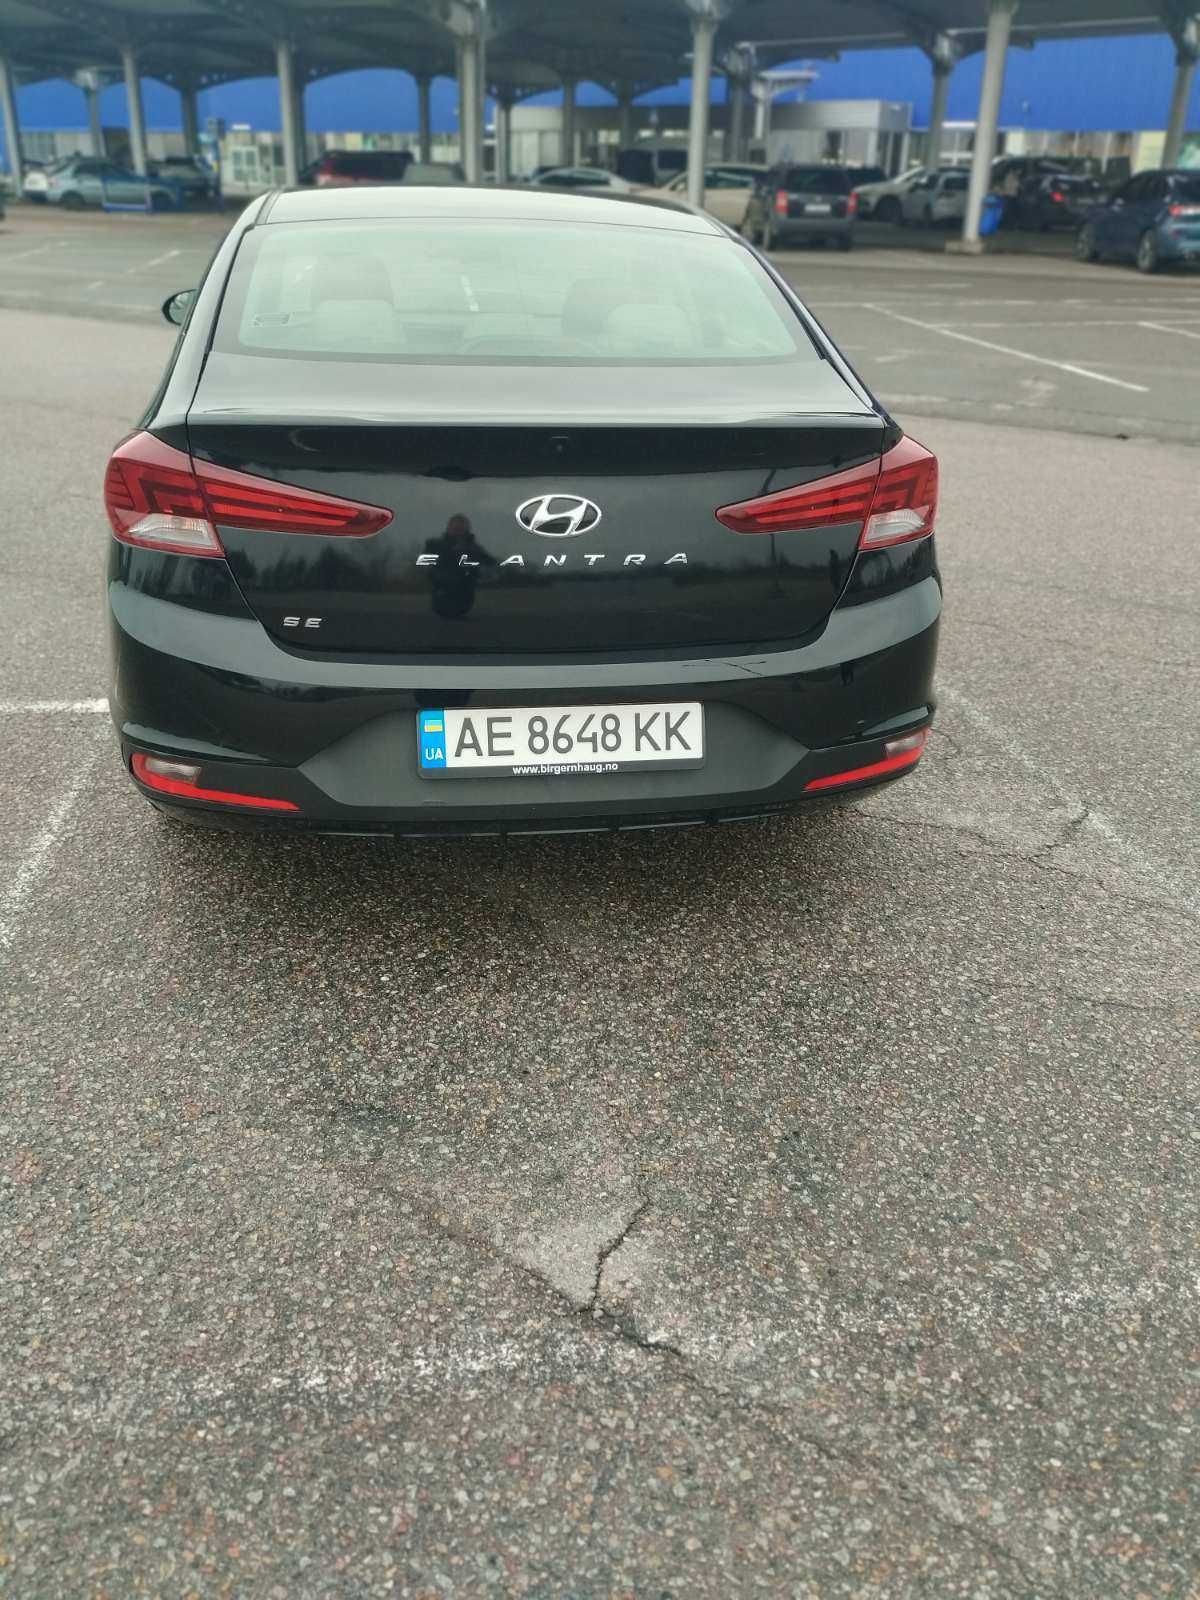 Hyundai Elantra AD 2019